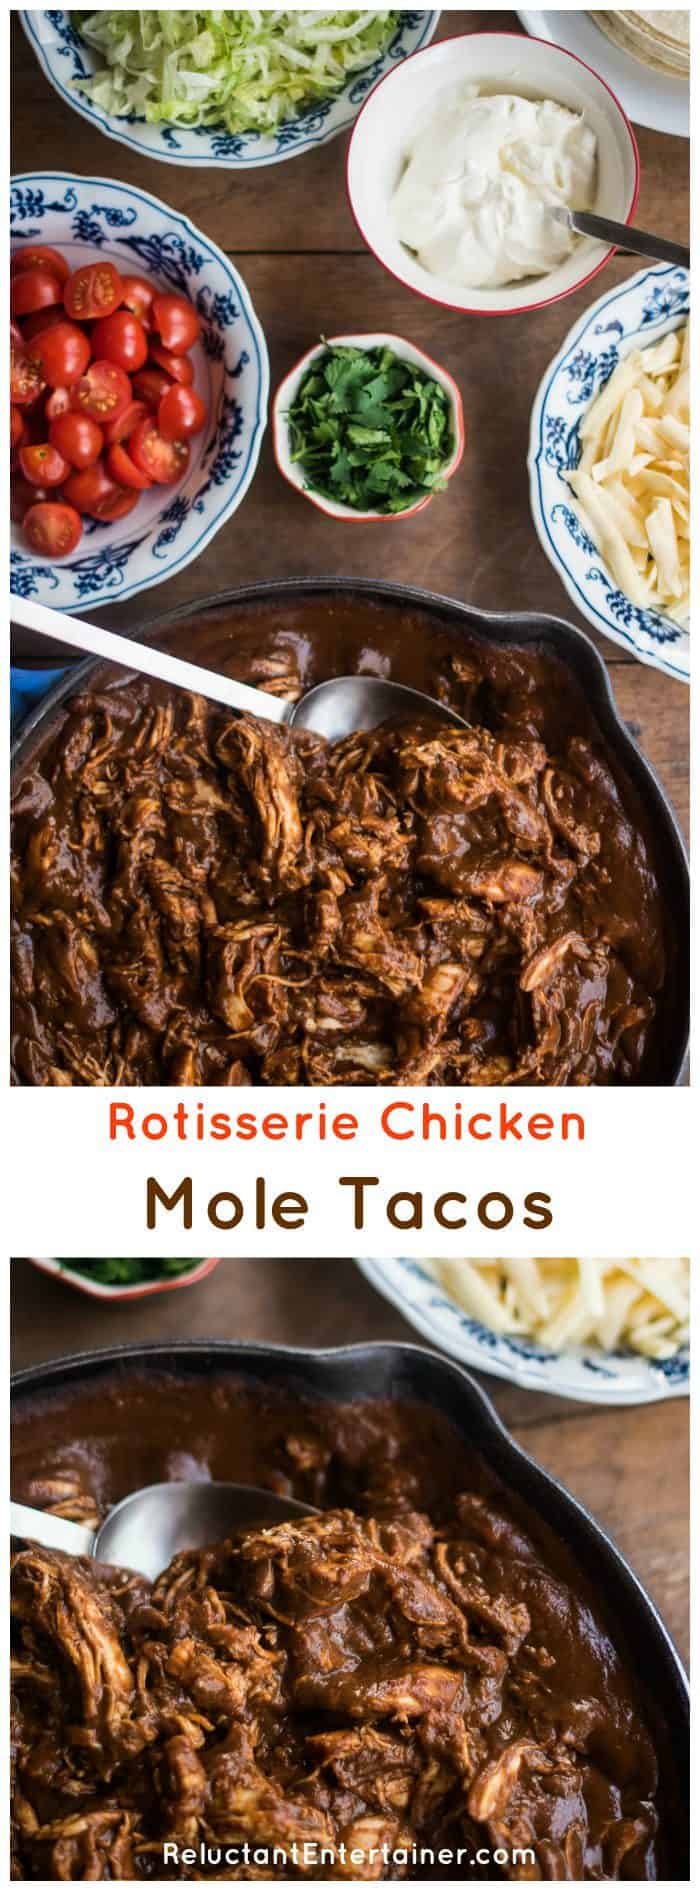 Rotisserie Chicken Mole Tacos Recipe